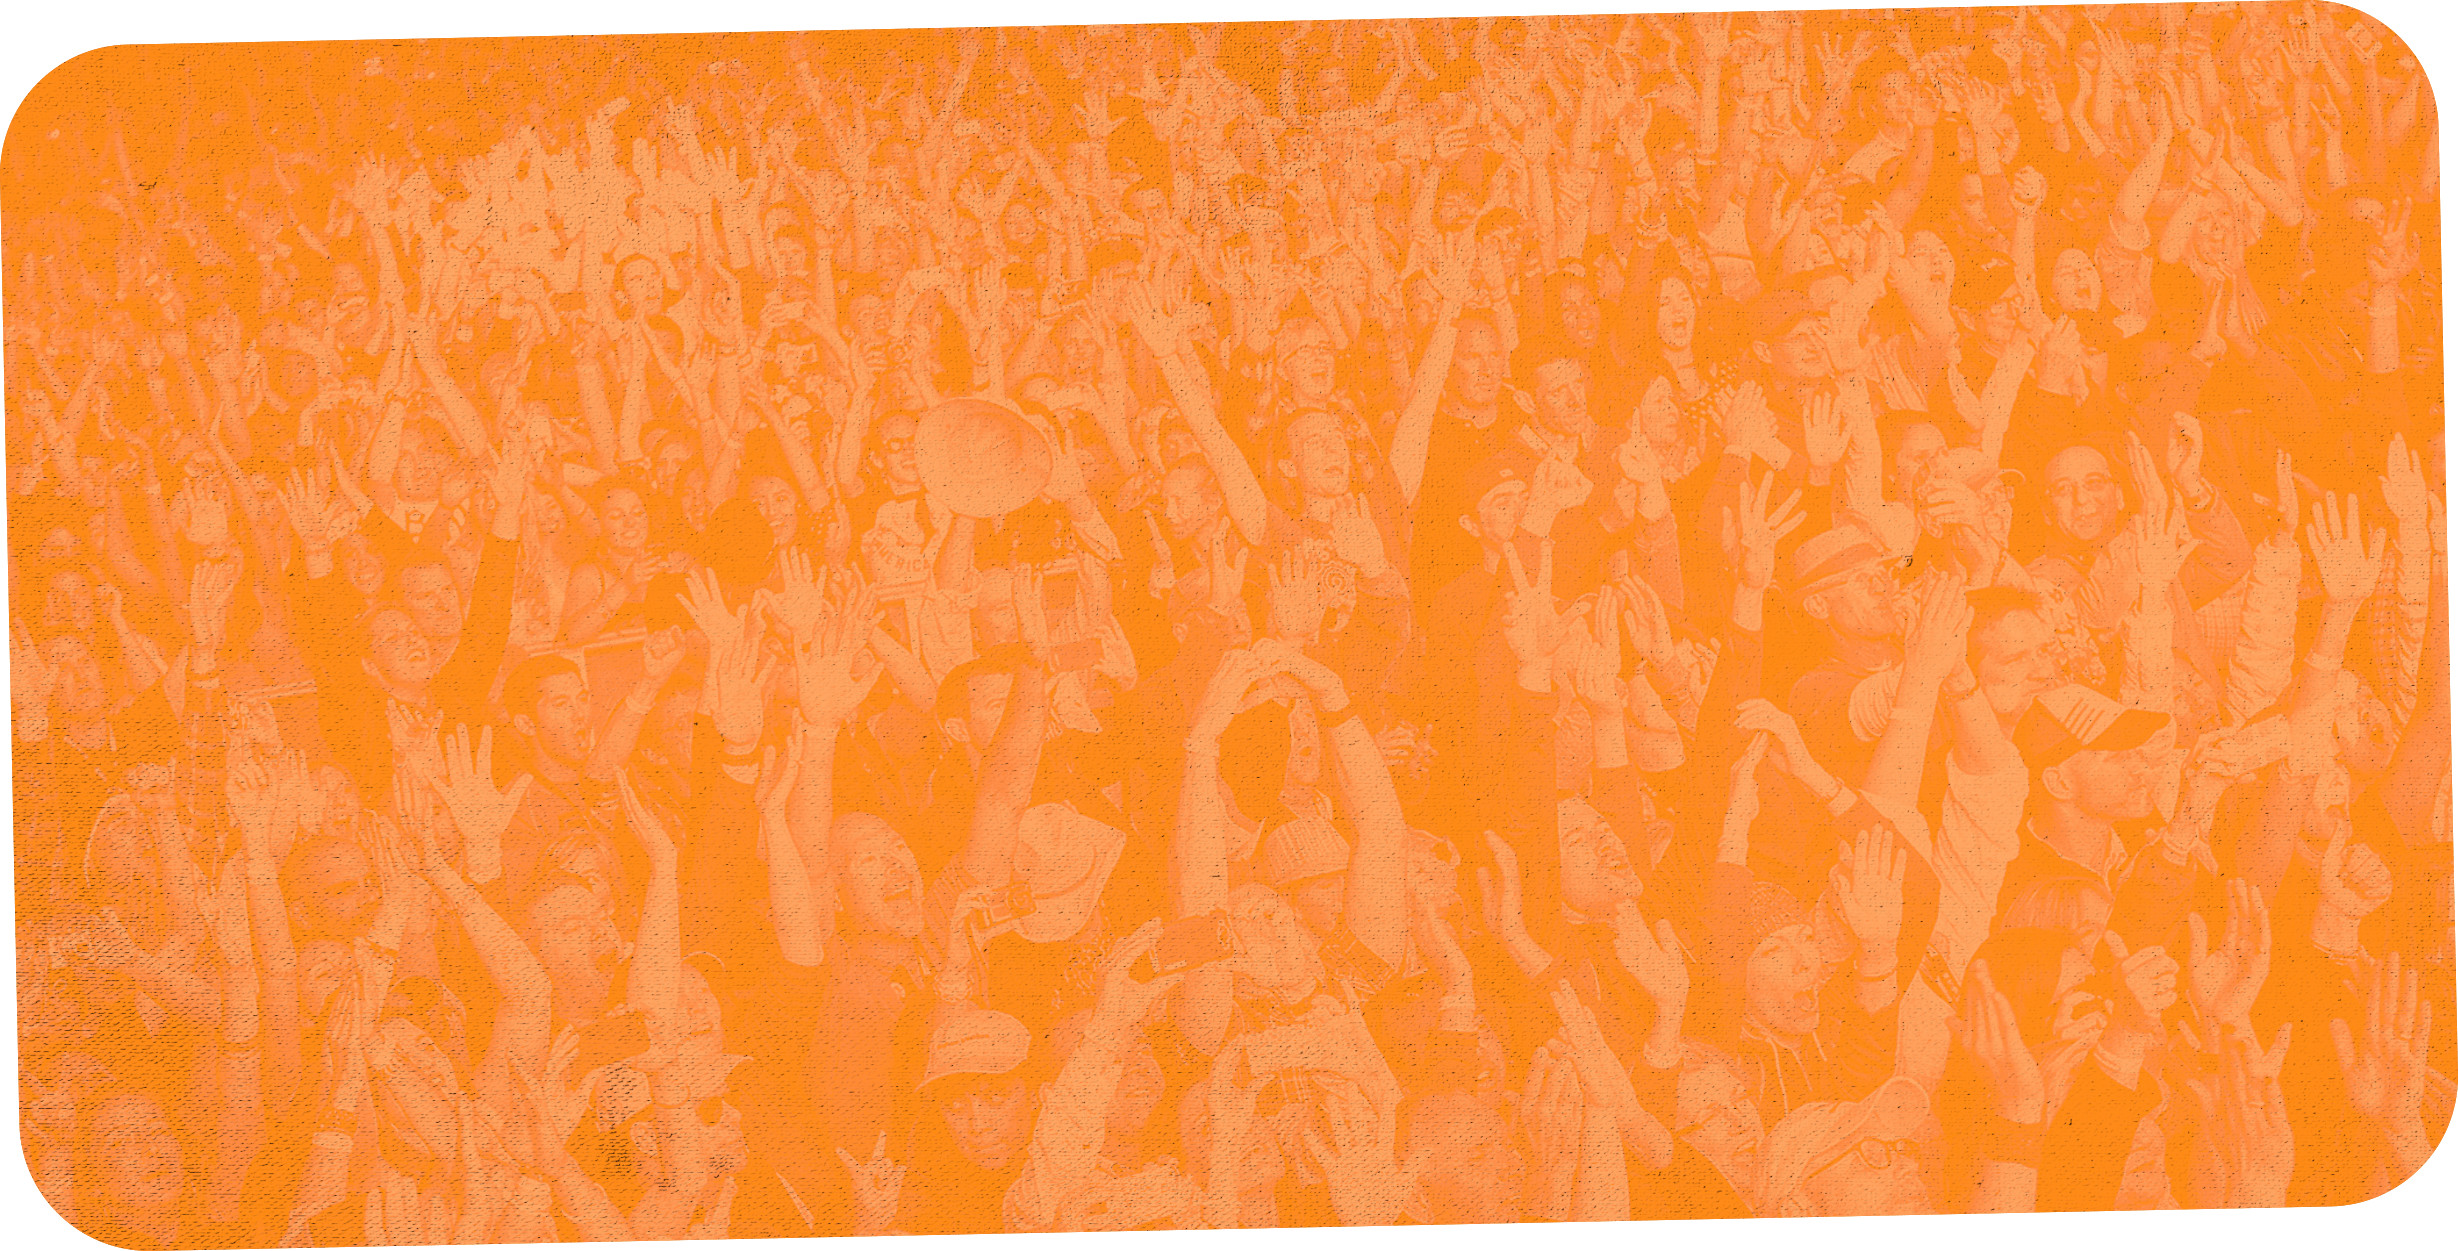 2458x1251 Orange concert goers coachella